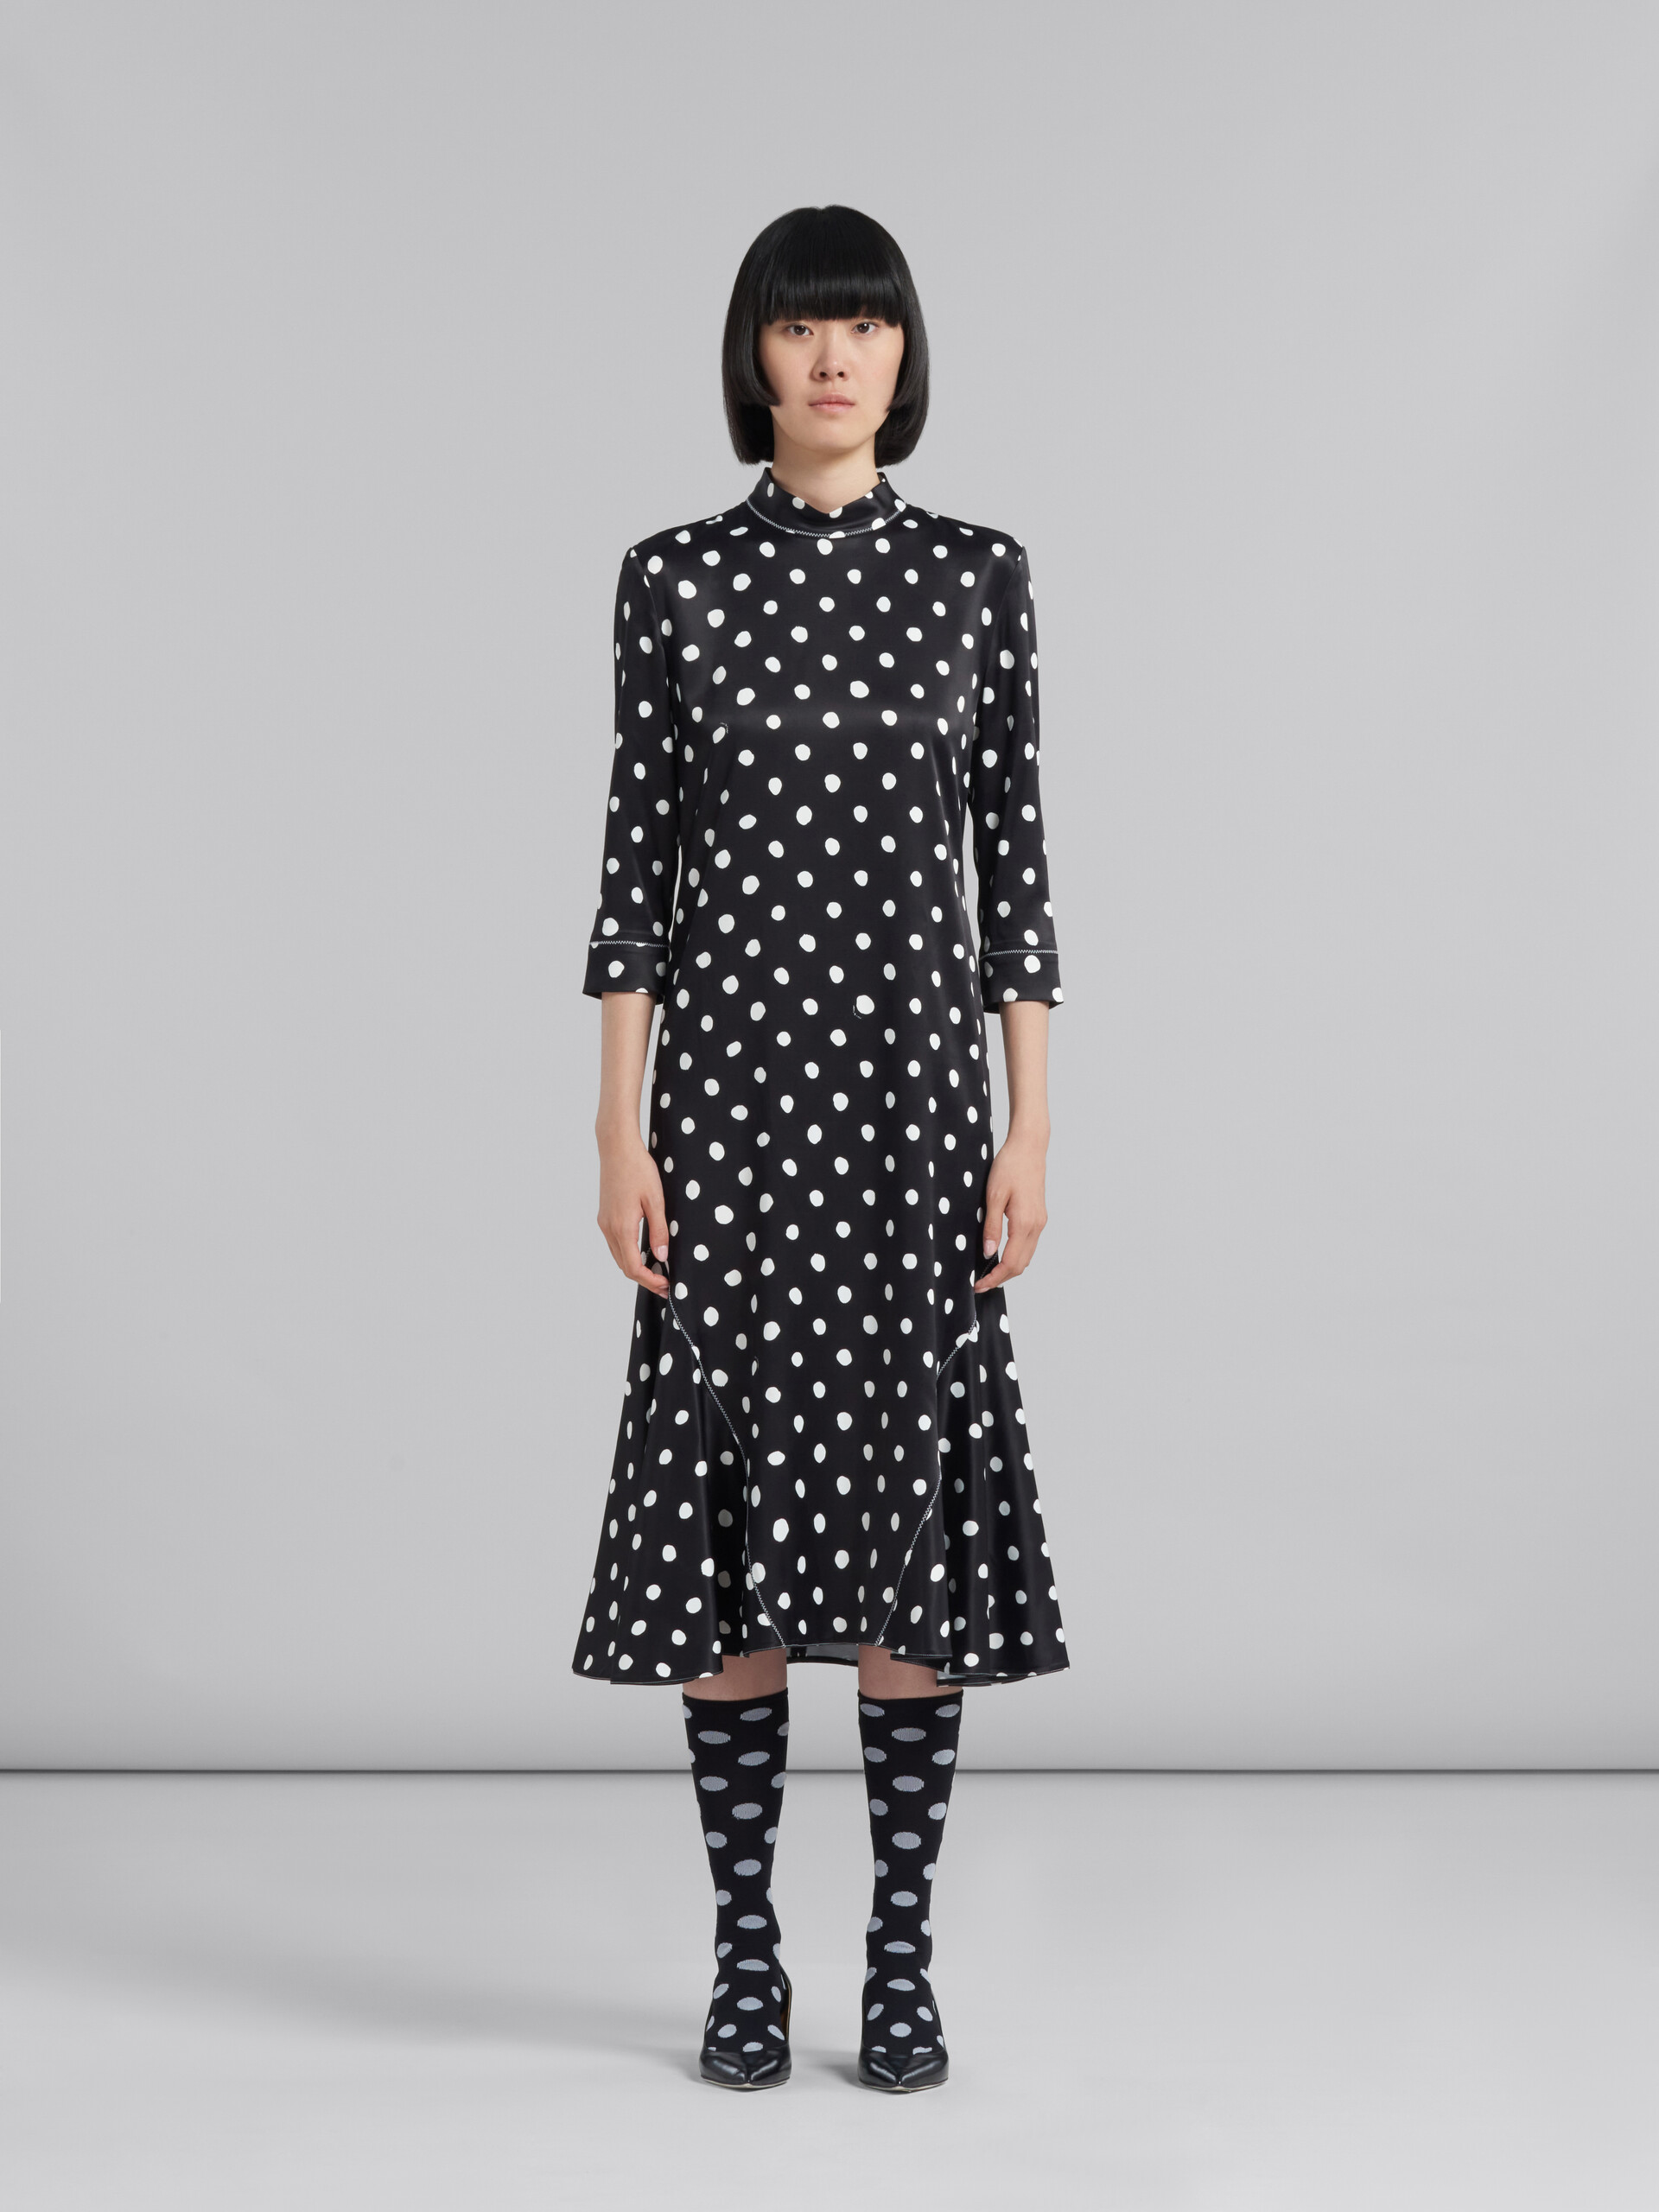 Black satin dress with polka dots - Dresses - Image 2